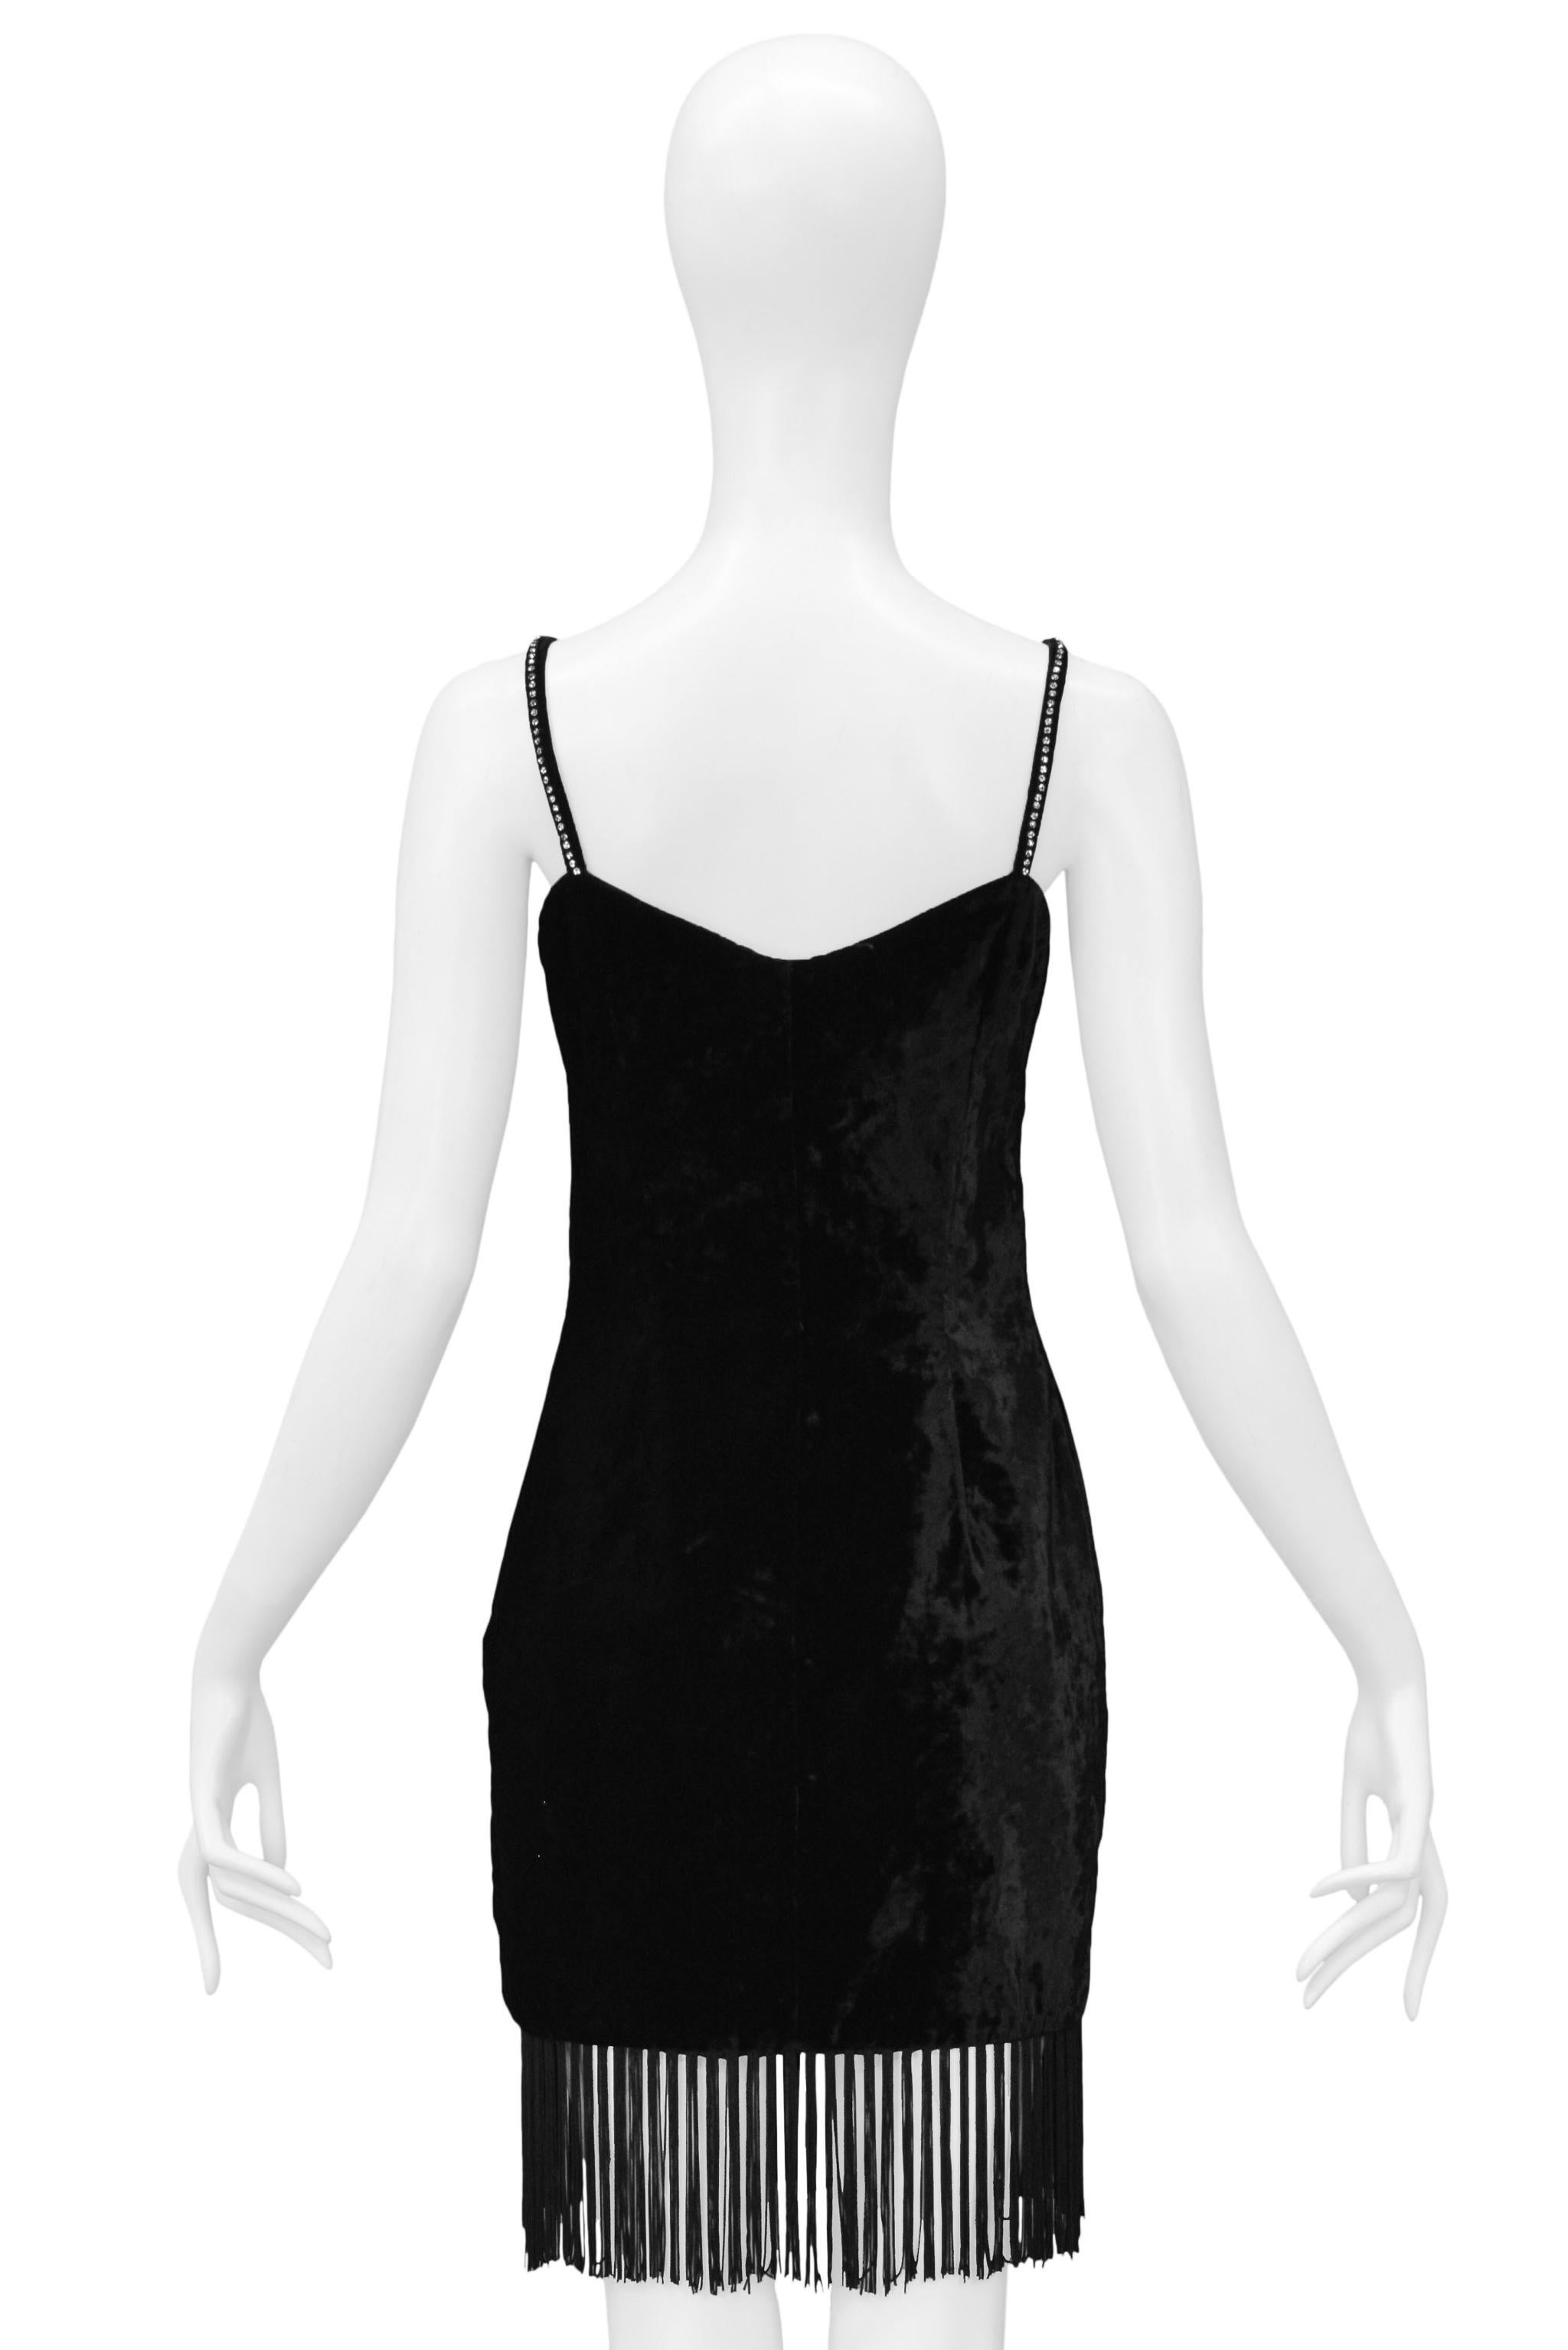 Dolce & Gabbana Black Velvet Mini Dress With Fringe Hem & Rhinestone Straps For Sale 2